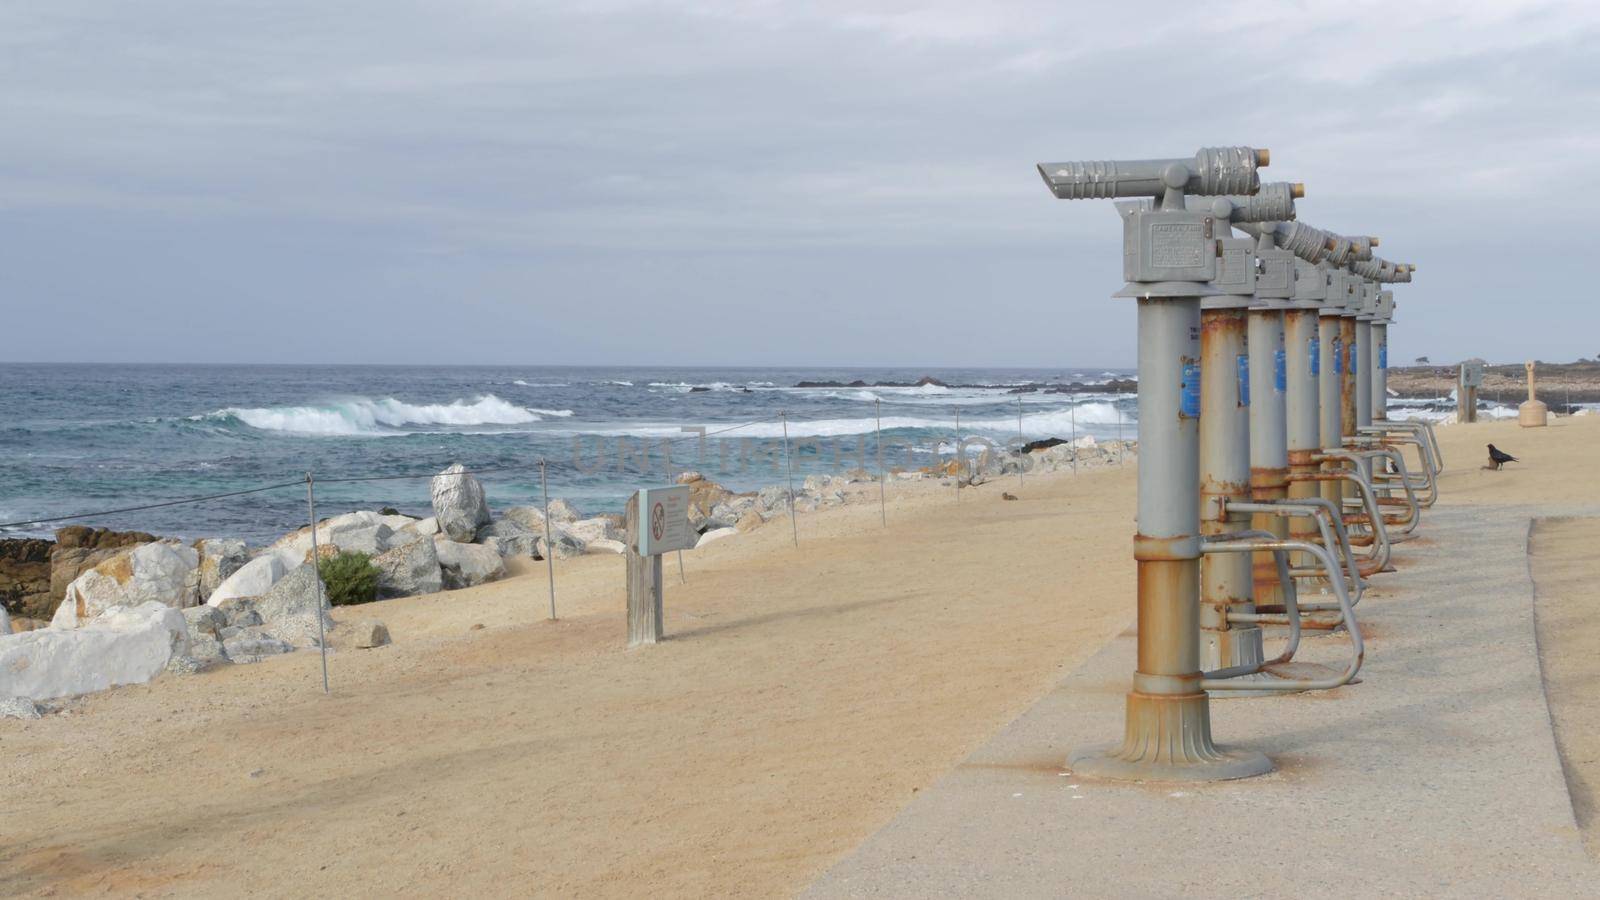 Stationary binoculars, telescope, tower viewer, spyglass or scope, ocean beach. by DogoraSun